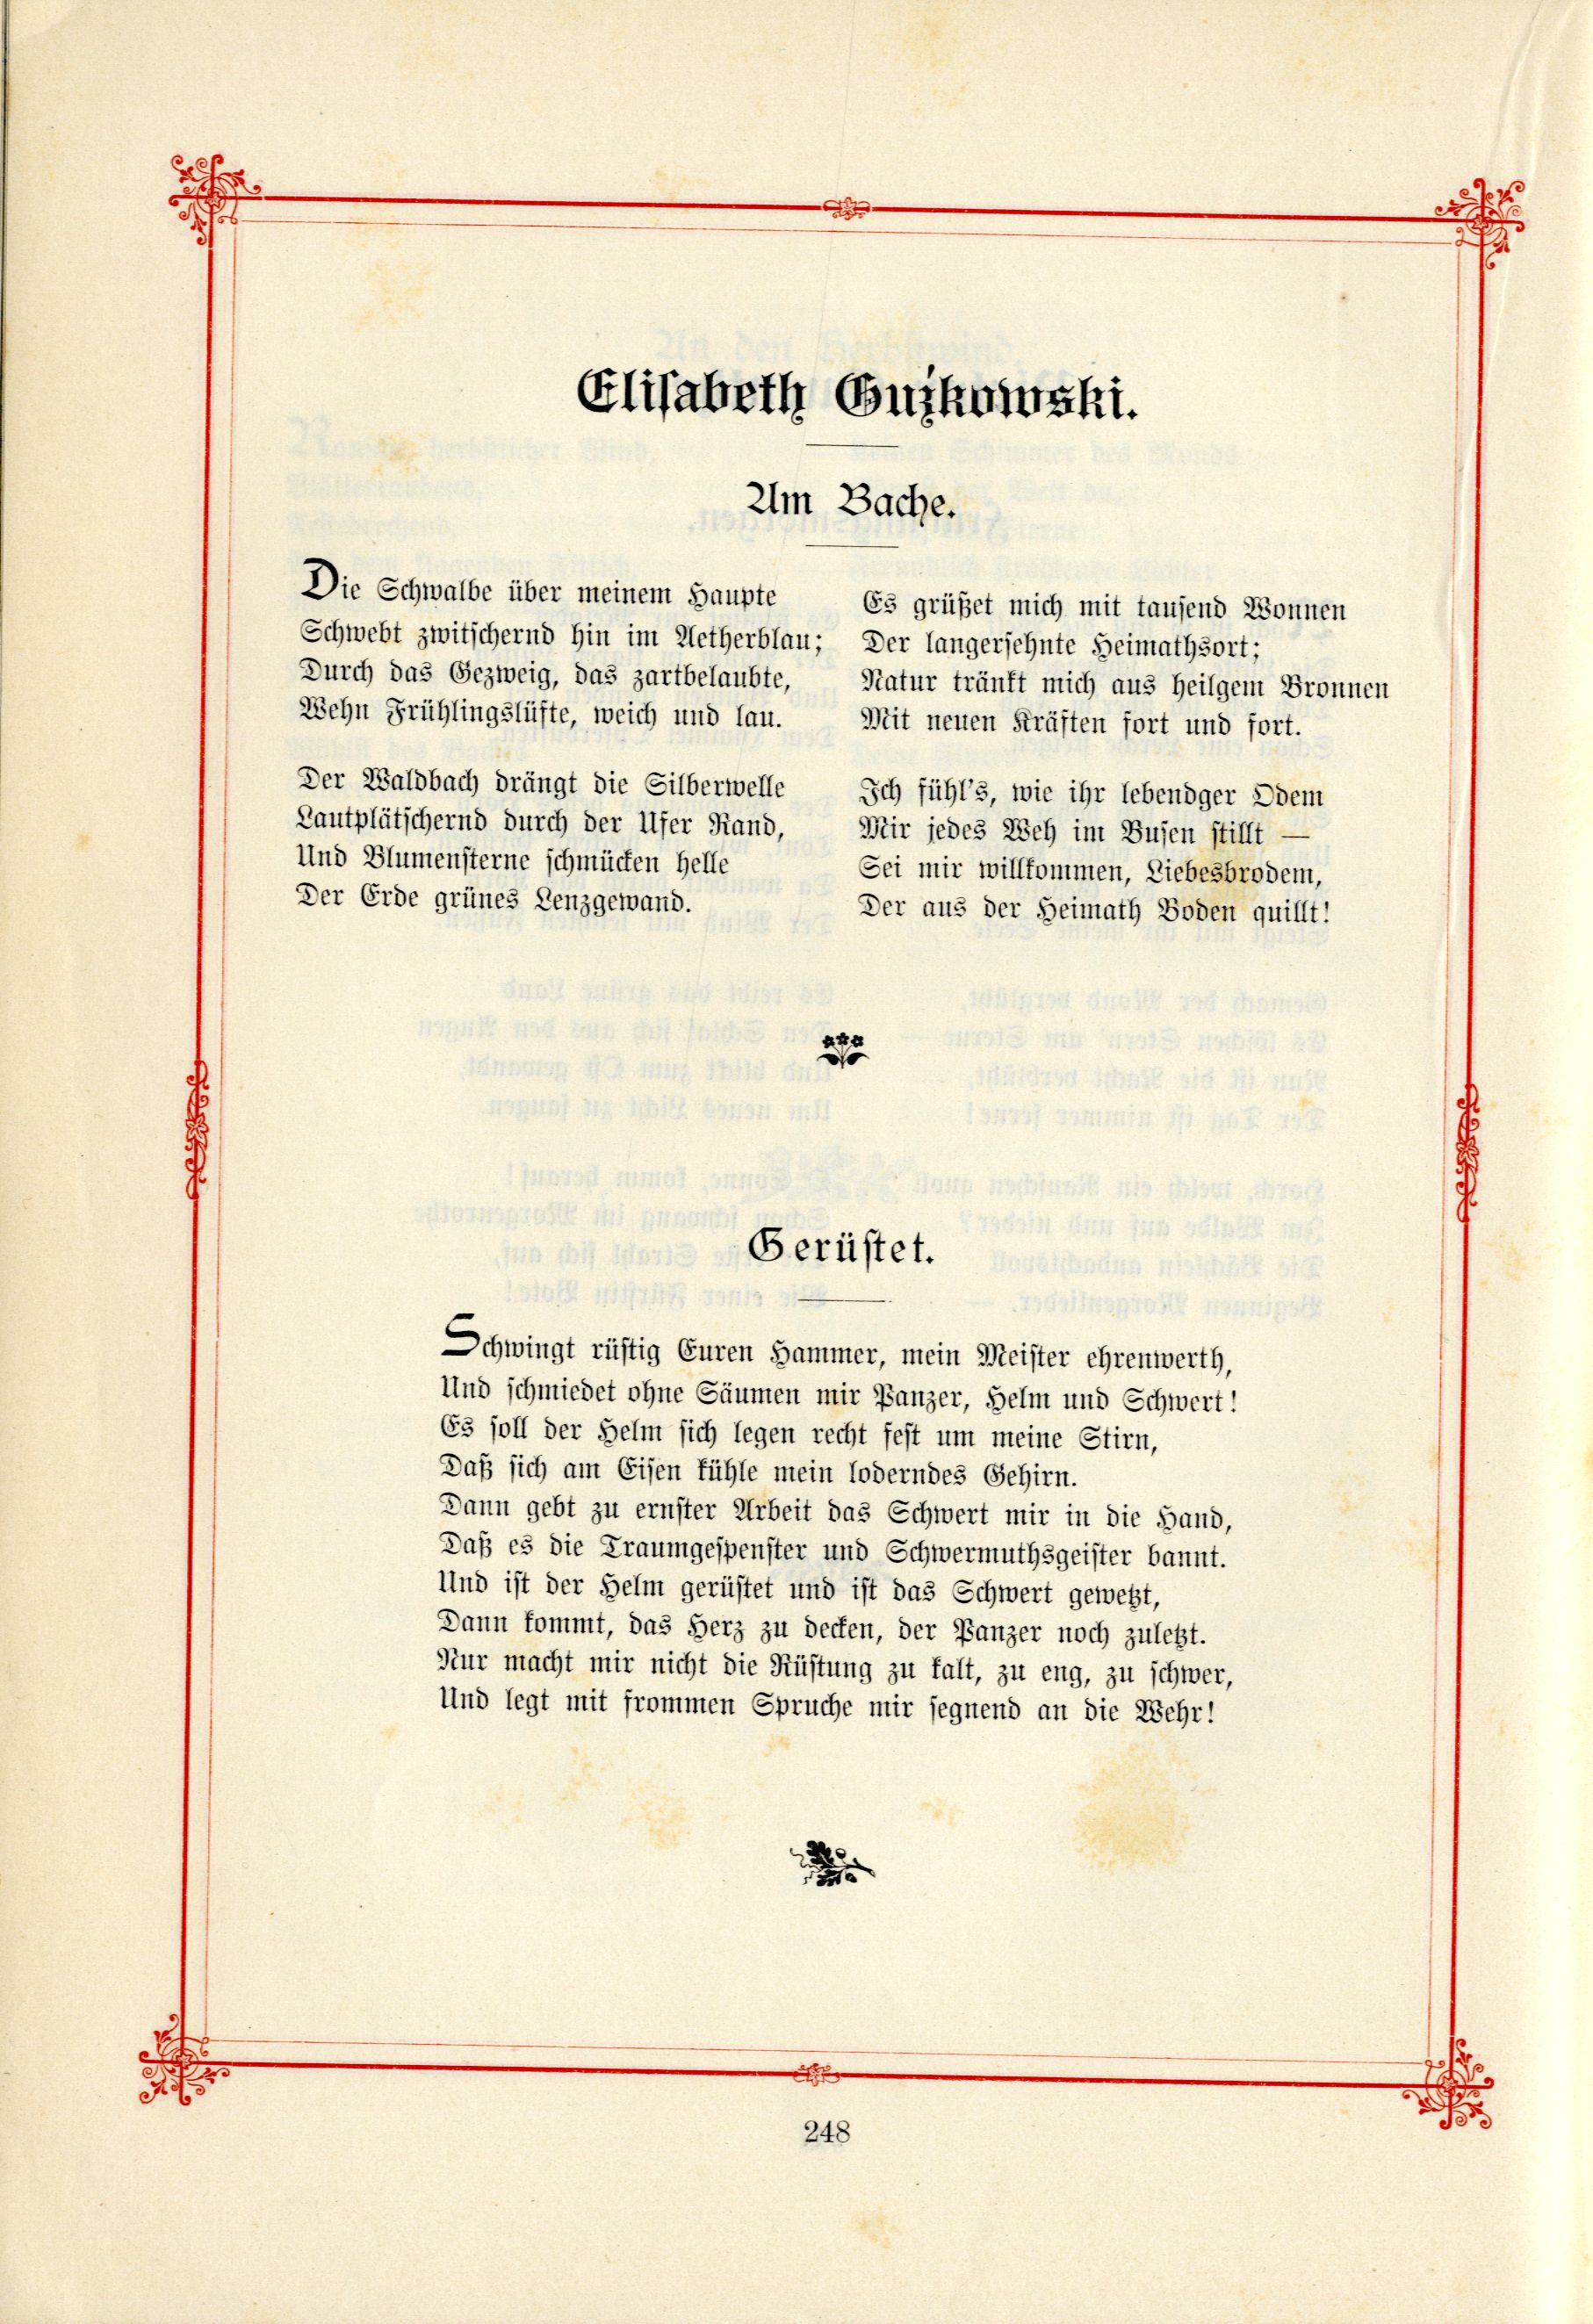 Am Bache (1895) | 1. (248) Main body of text